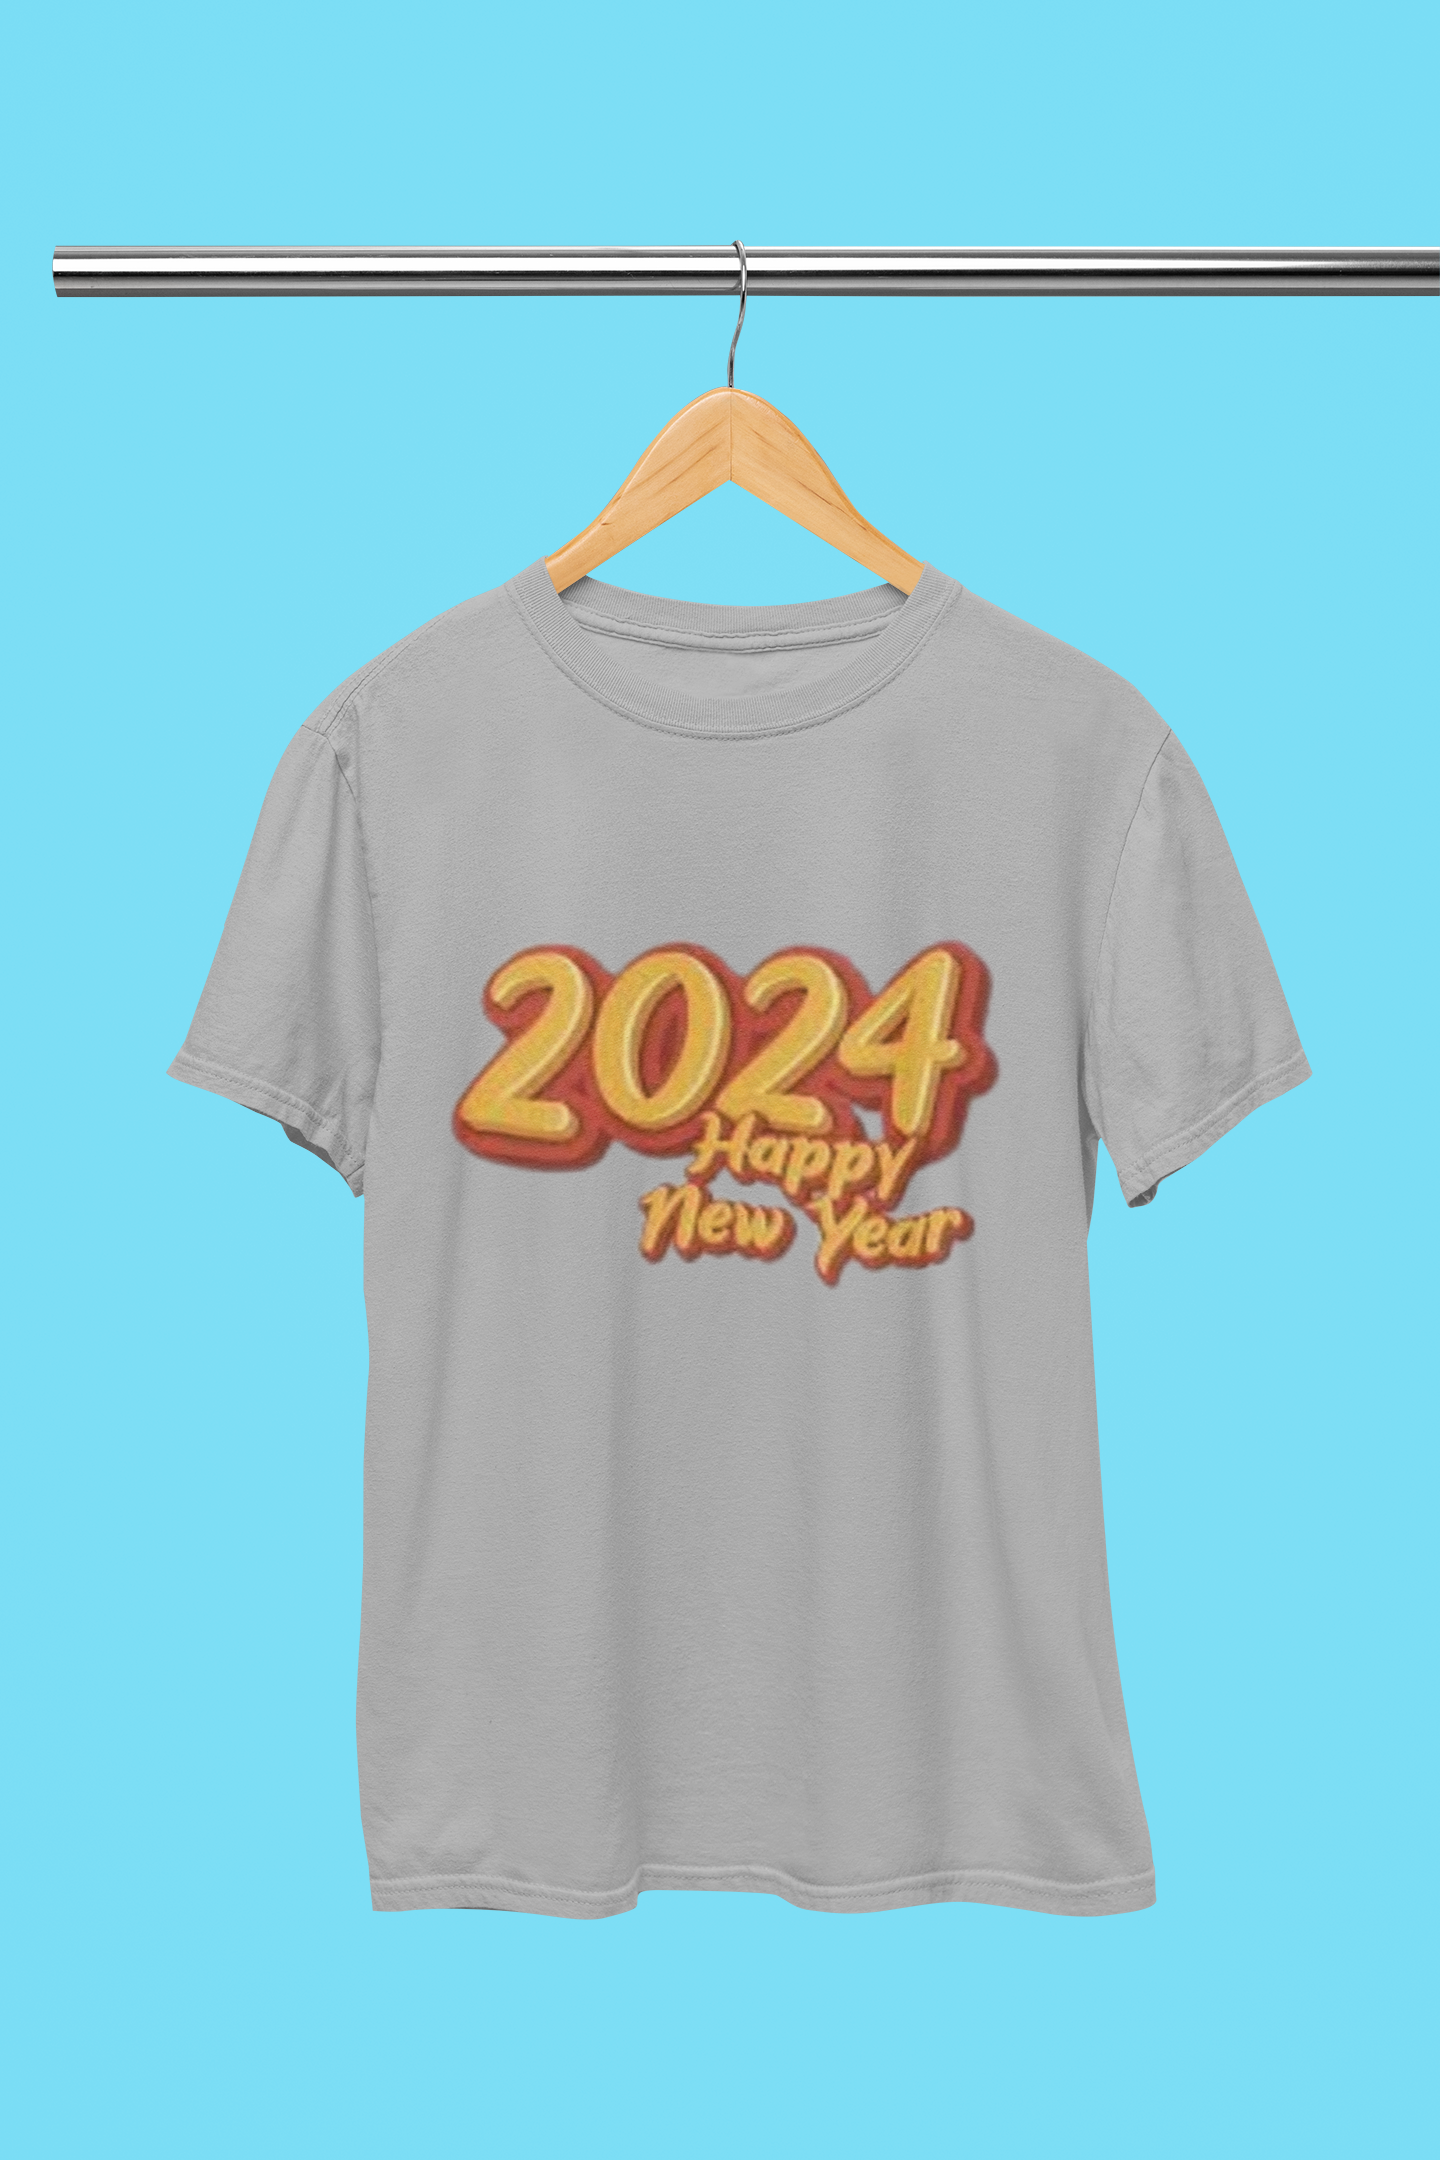 NEW YEAR 2024 T-SHIRT